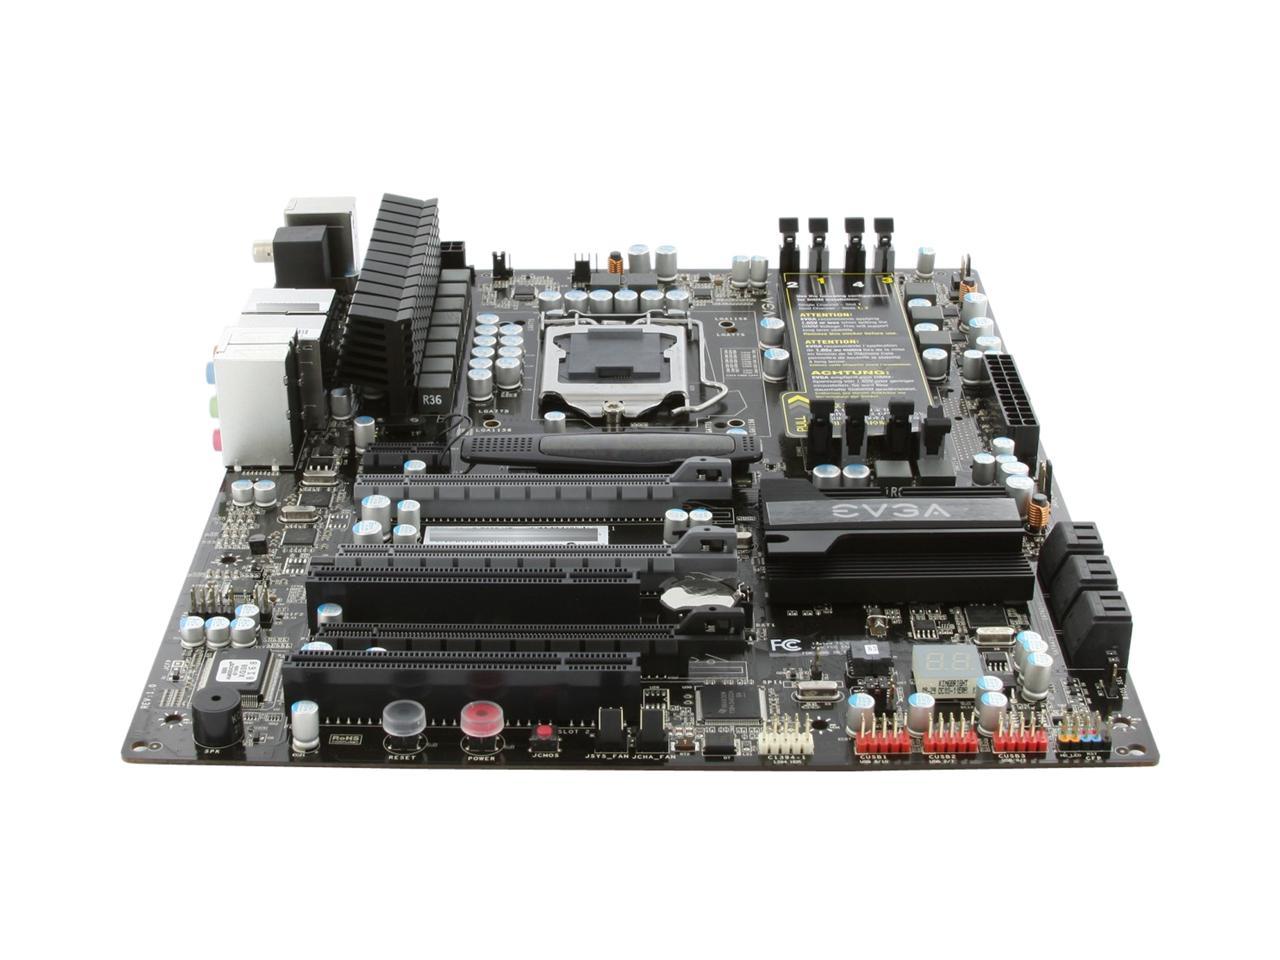 FTW FTW 132-LF-E657-KR DIMM DDR3 NON-ECC PC3-10600 1333MHz RAM Memory Classified 200 Classified 200 A-Tech 16GB KIT 132-LF-E655-KR 160-LF-E659-KR FTW 200 FTW 2 4 x 4GB For EVGA P55 Series P55